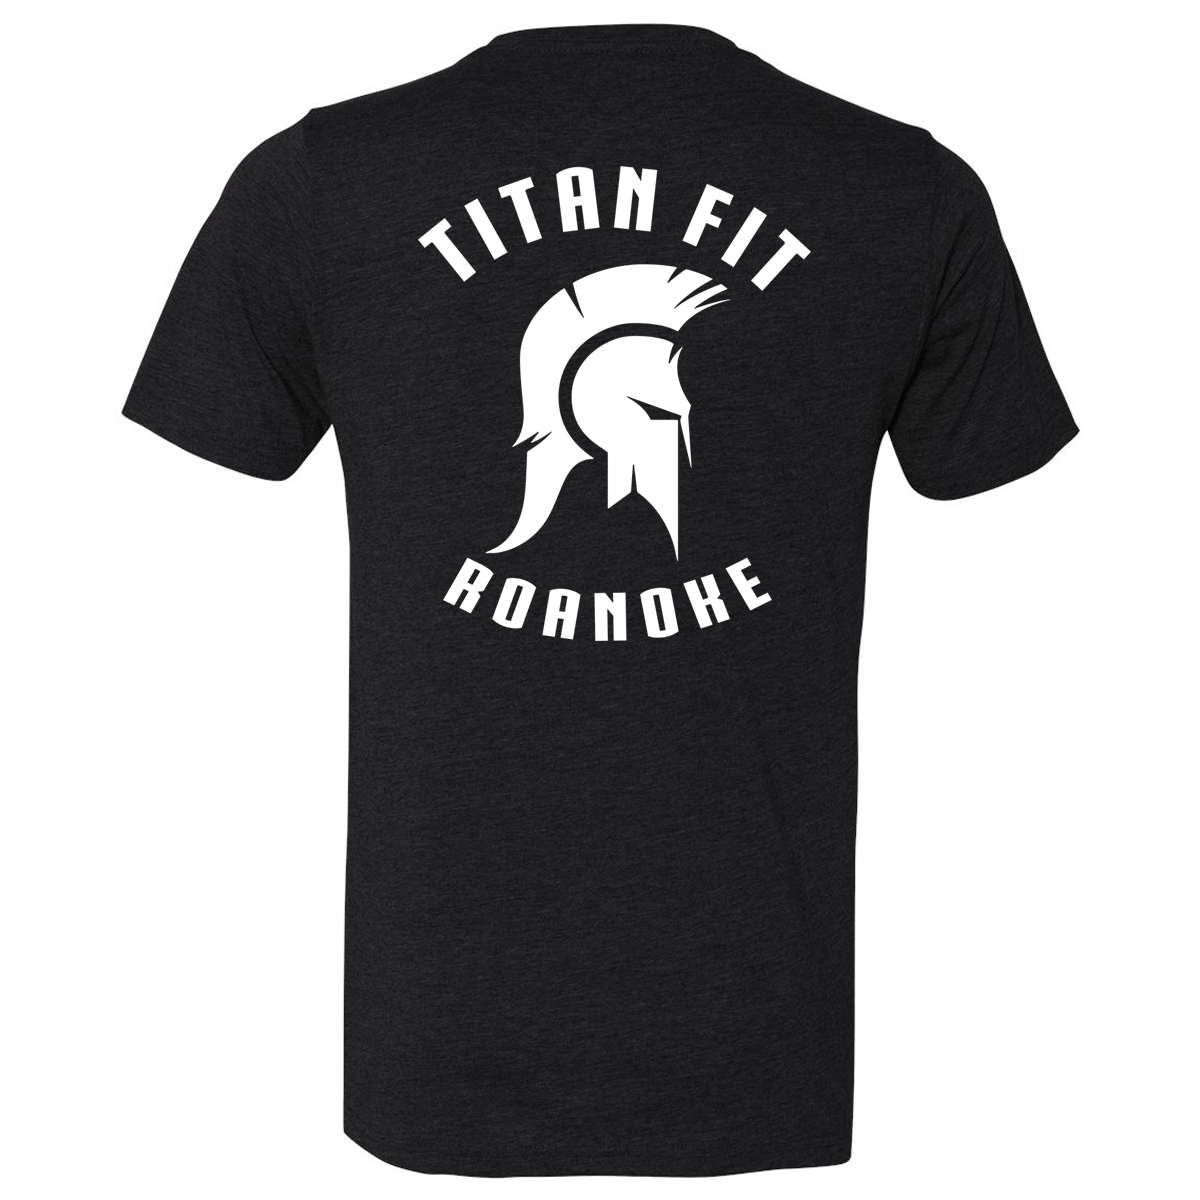 Titan Fit - Roanoke - T-Shirt - Black - Back